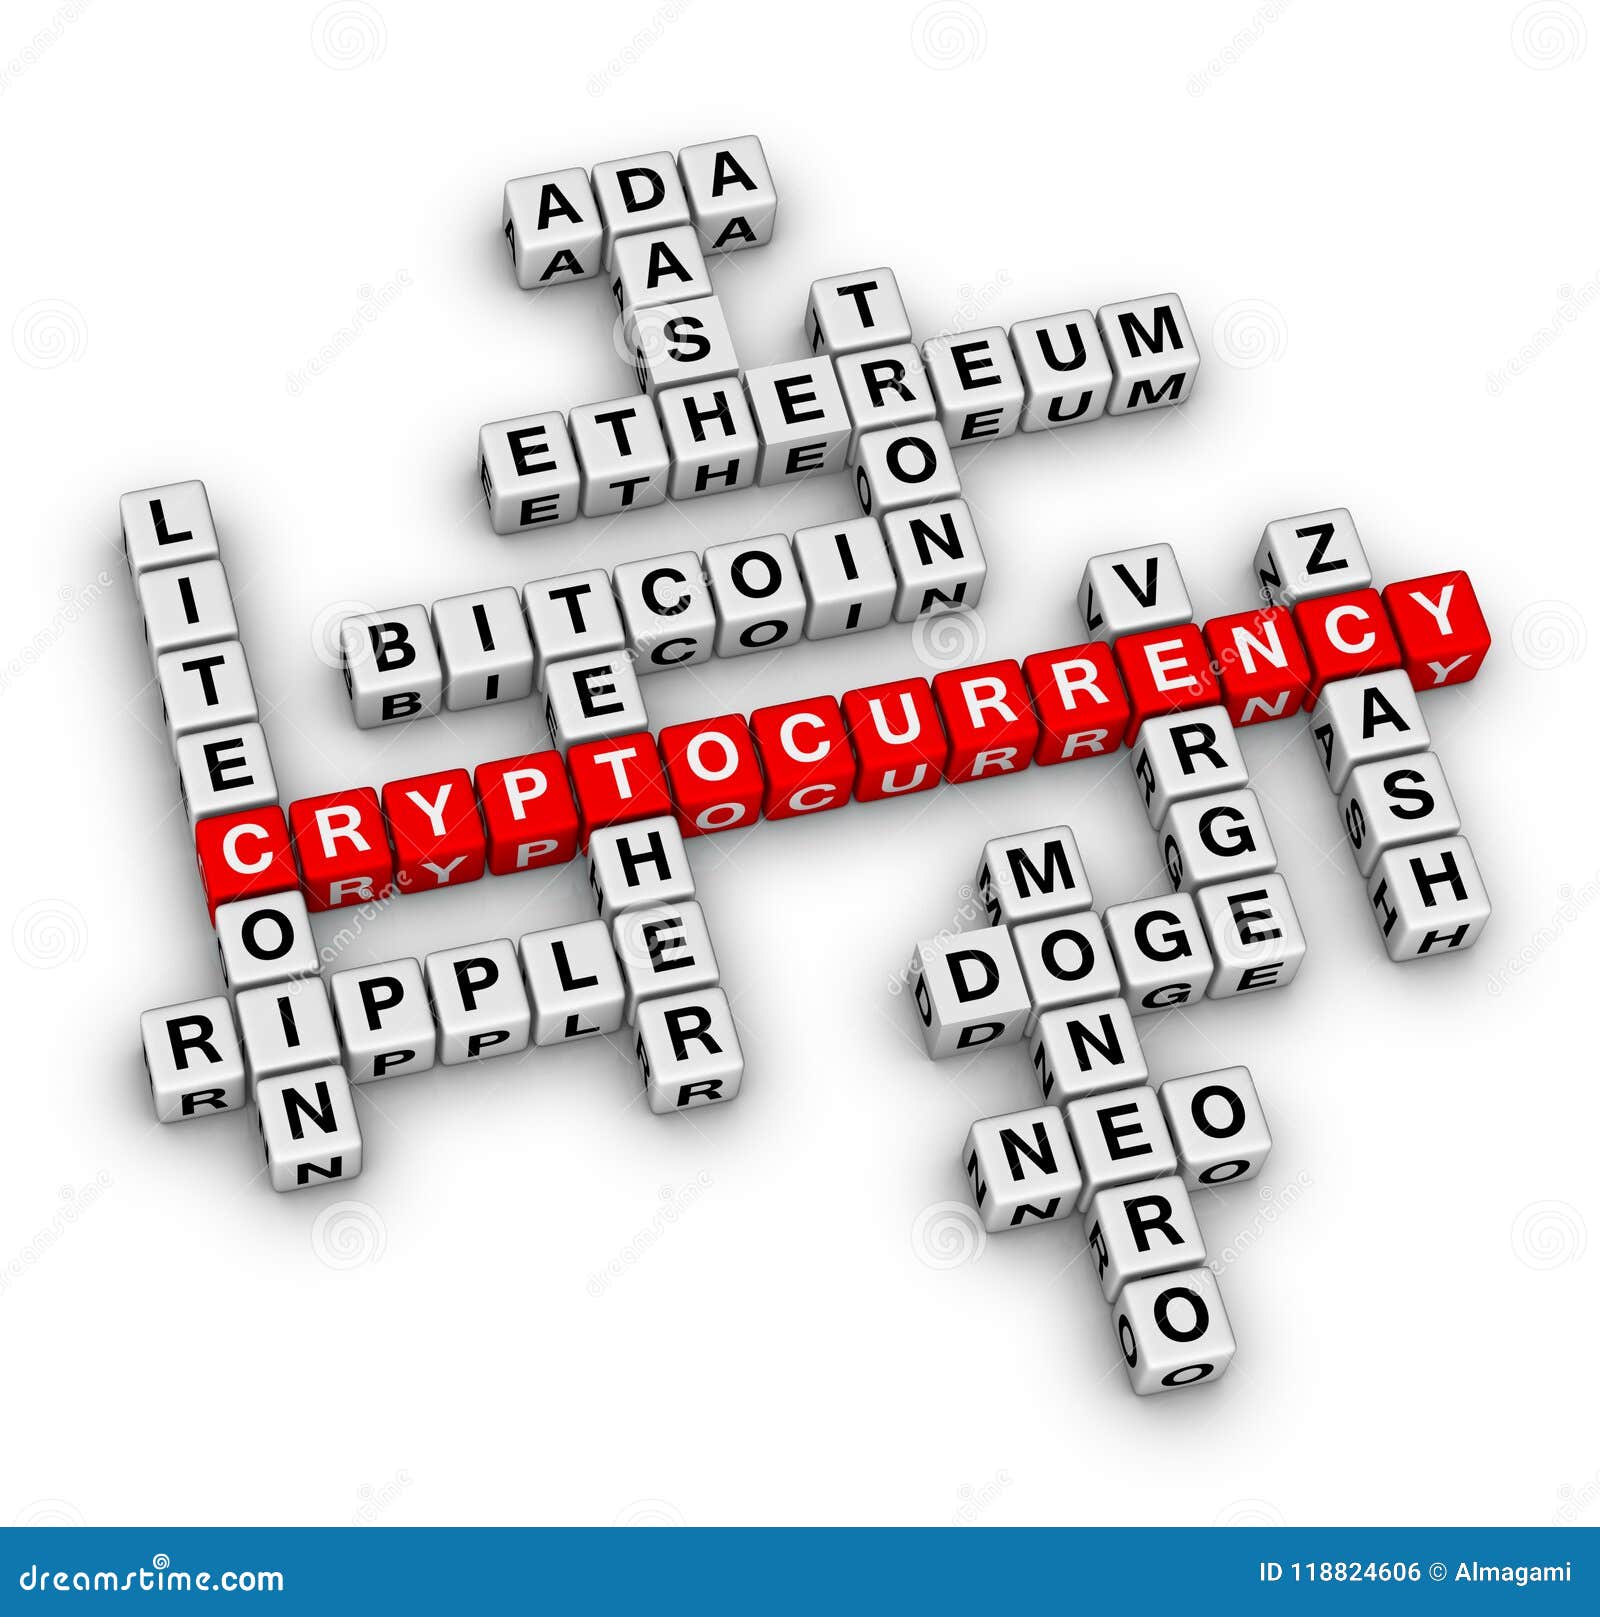 Crypto crossword bitcoin rate in ghana